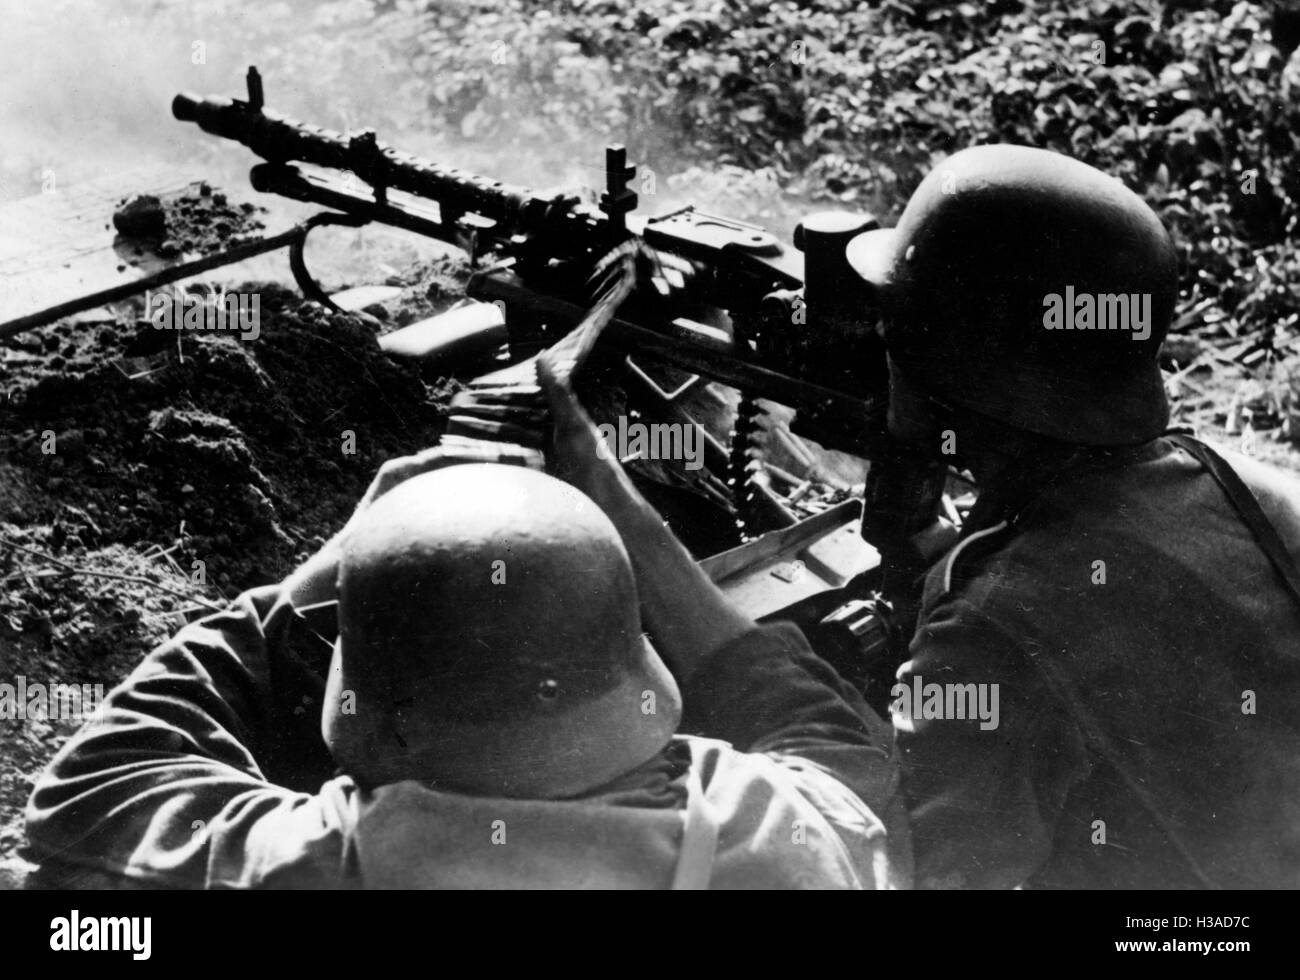 7.92 machine gun bullets in link for vintage MG 34 German machine gun Stock  Photo - Alamy